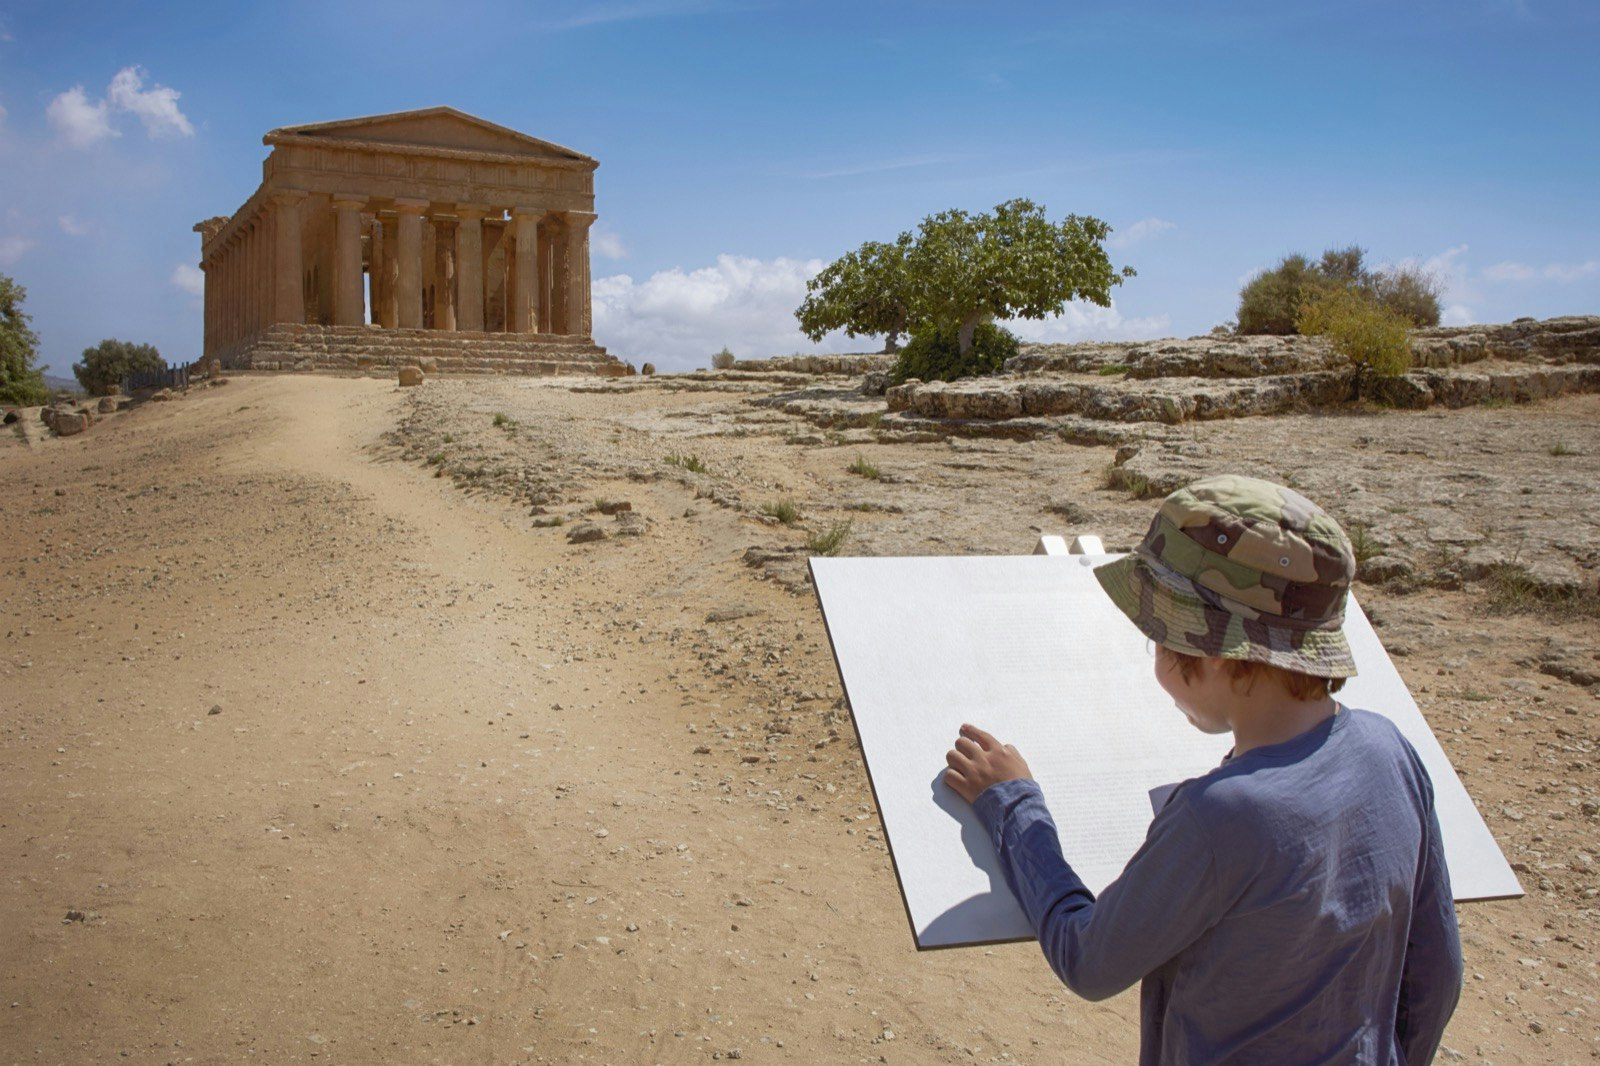 a boy sketches before an Italian ruin